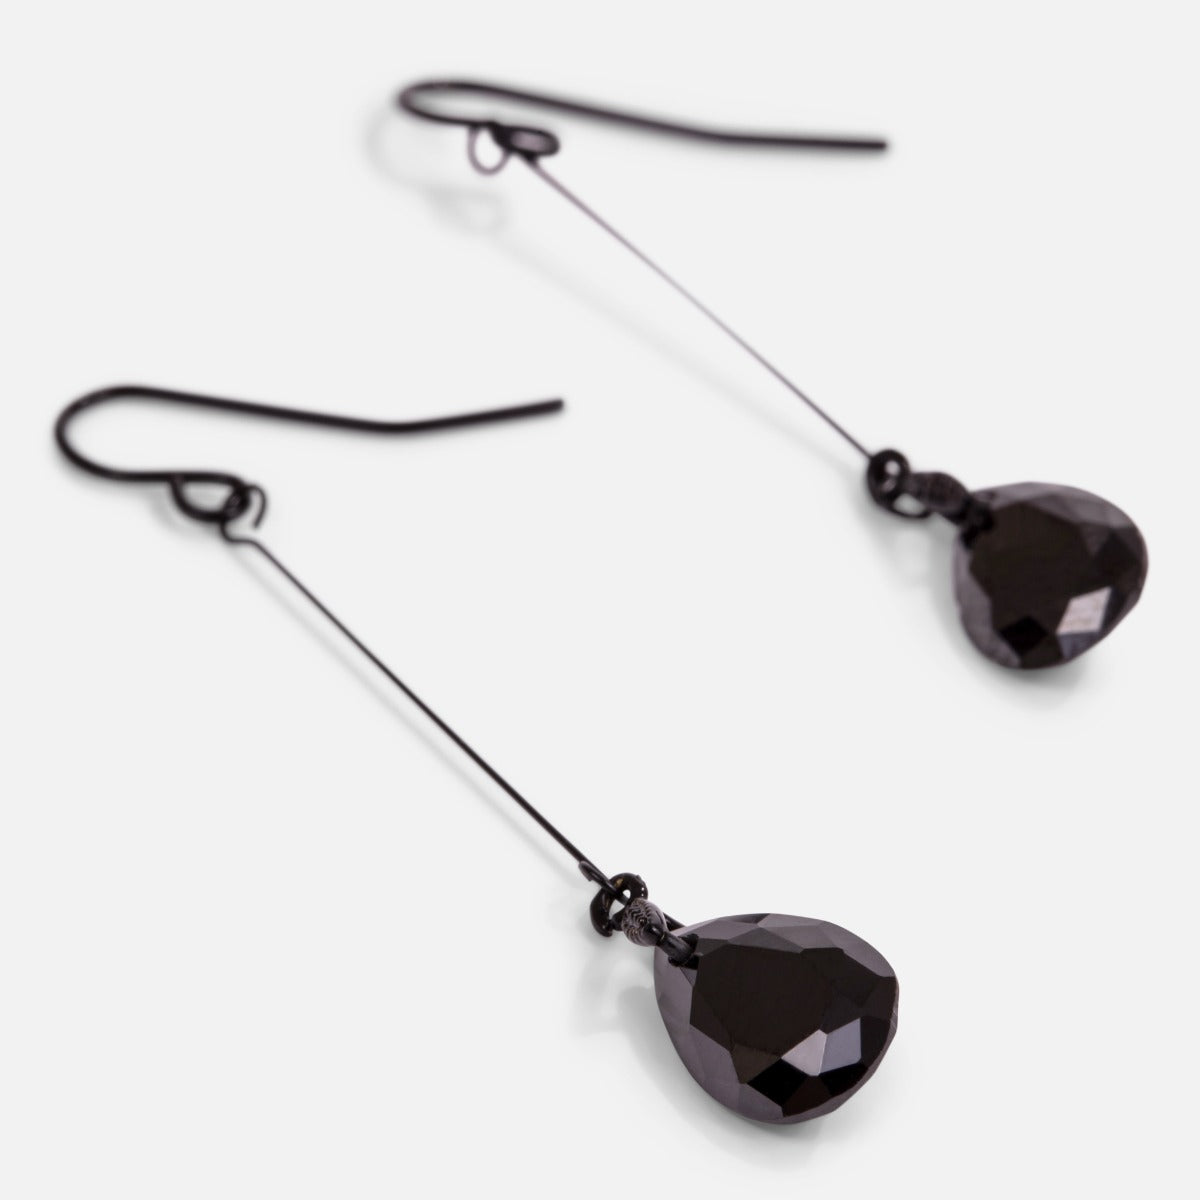 Black earrings stem and drop-shaped stone